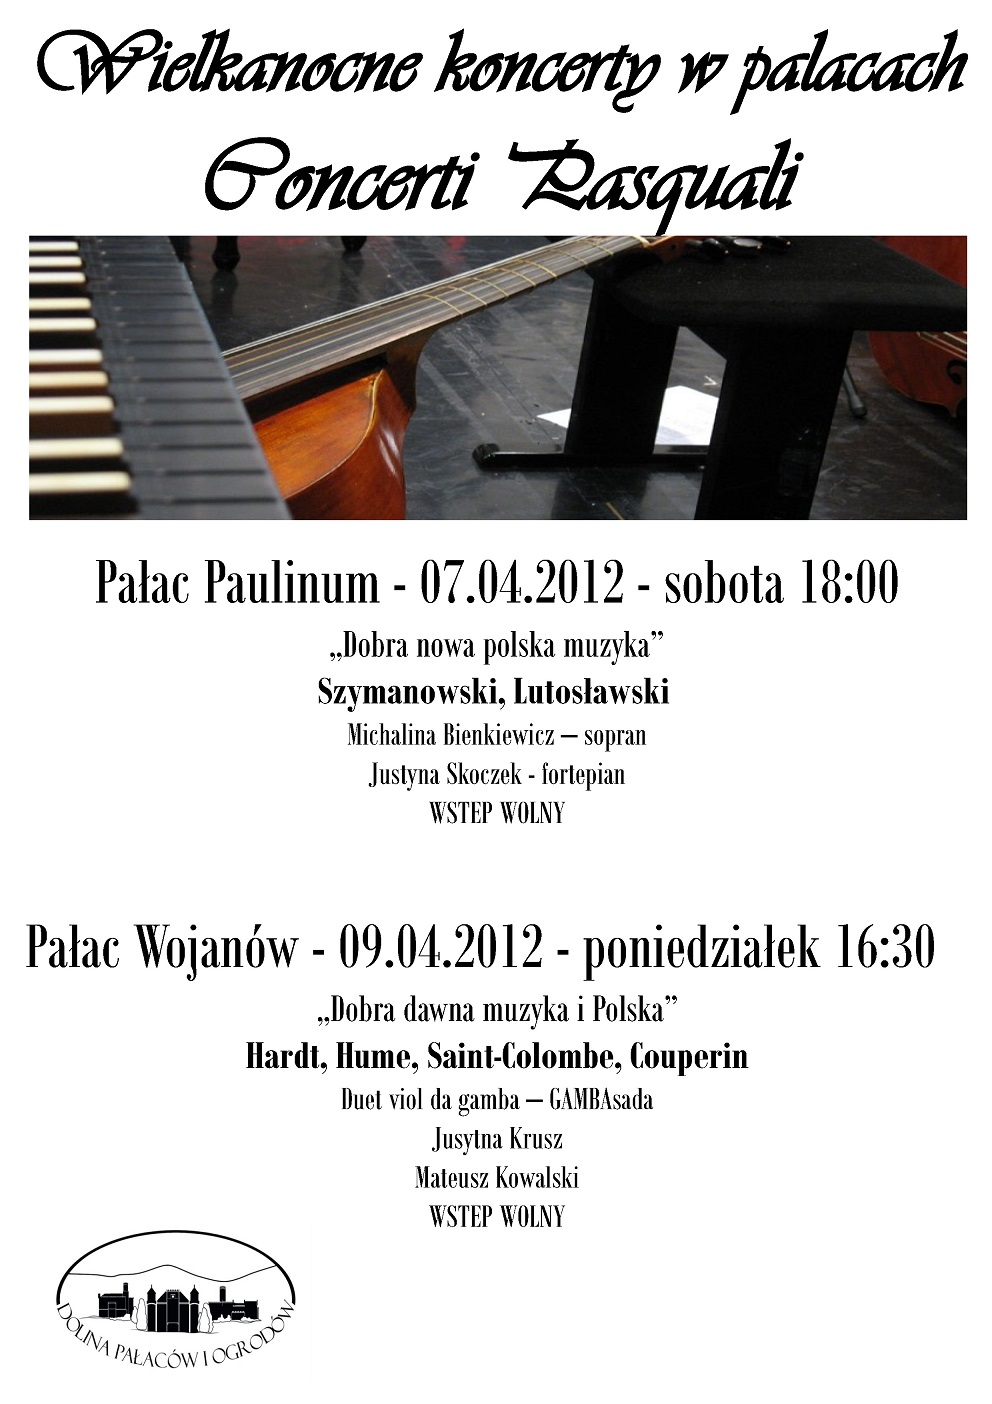 Concerti Pasquali 2012